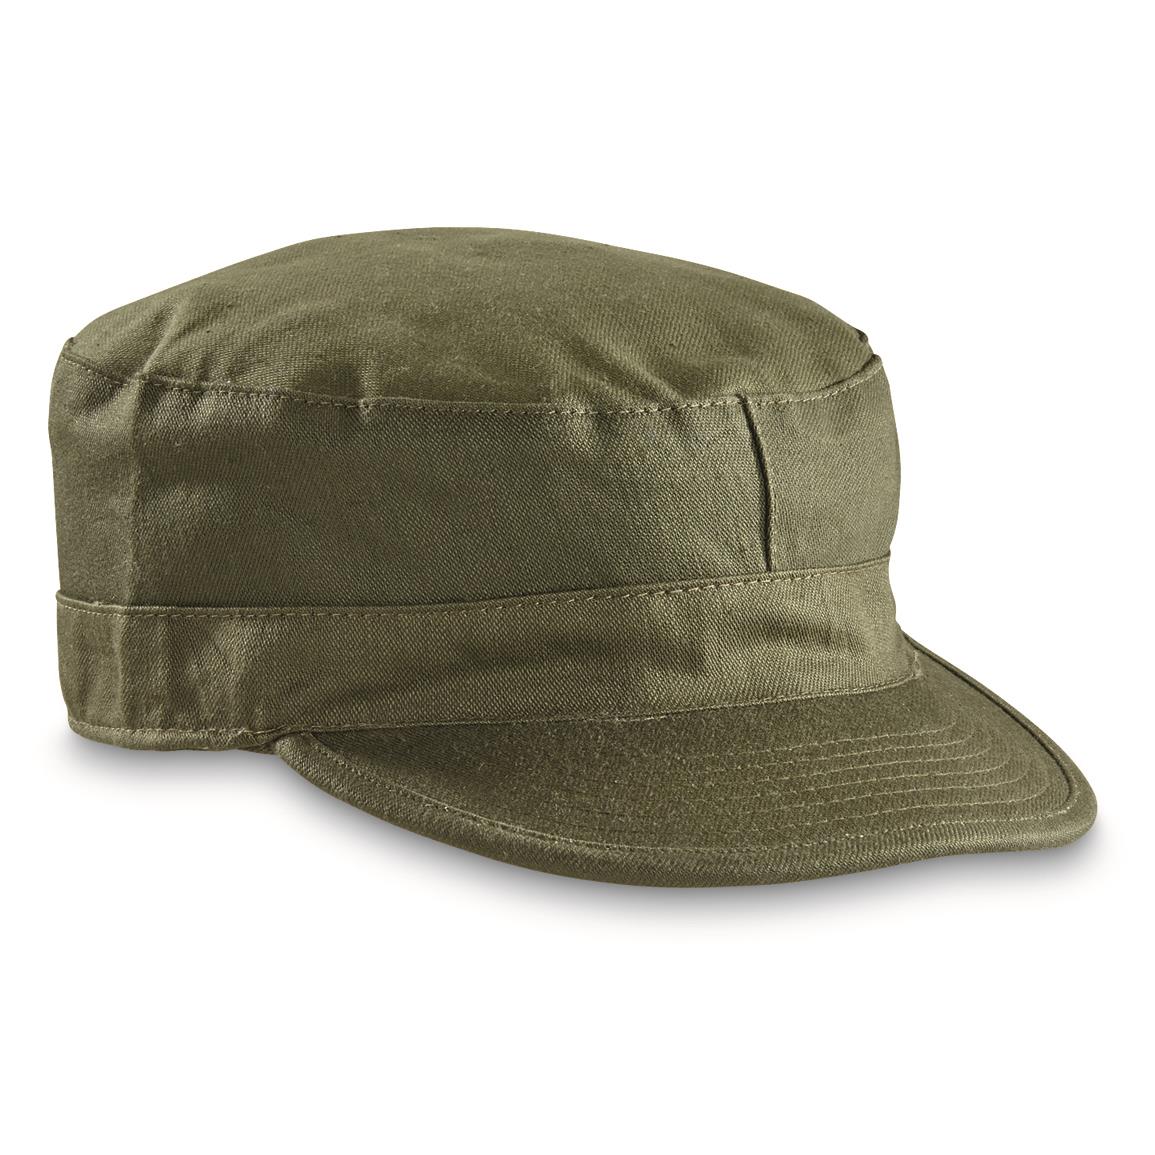 U.S. Military Surplus Combat Caps, 5 Pack, New - 696934, Military Hats